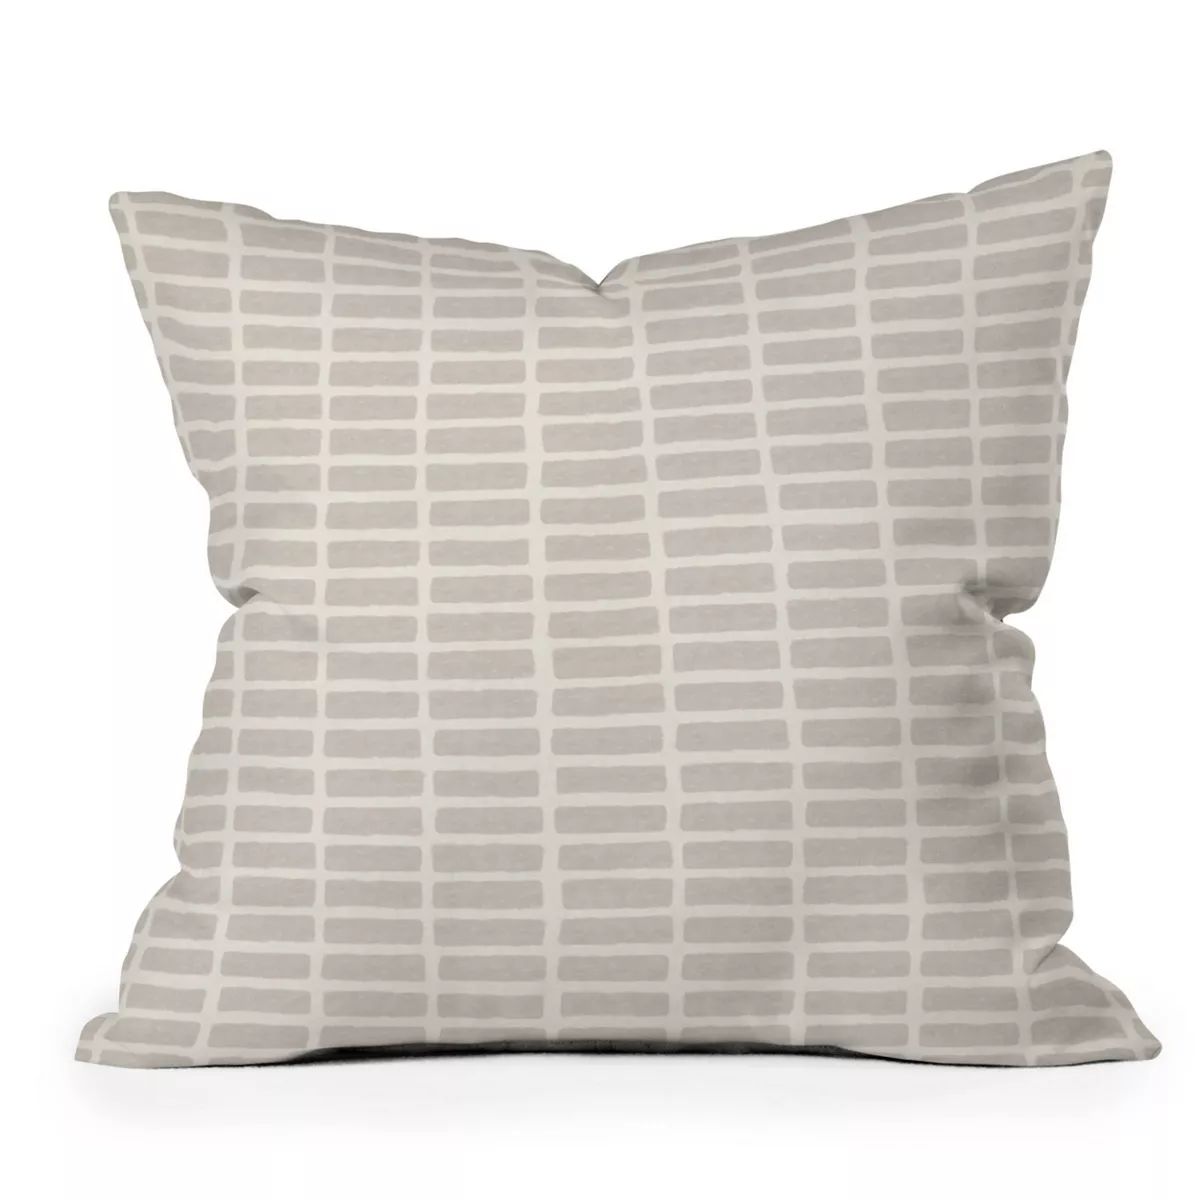 Little Arrow Design Co. Block Print Tile Outdoor Throw Pillow - Deny Designs | Target